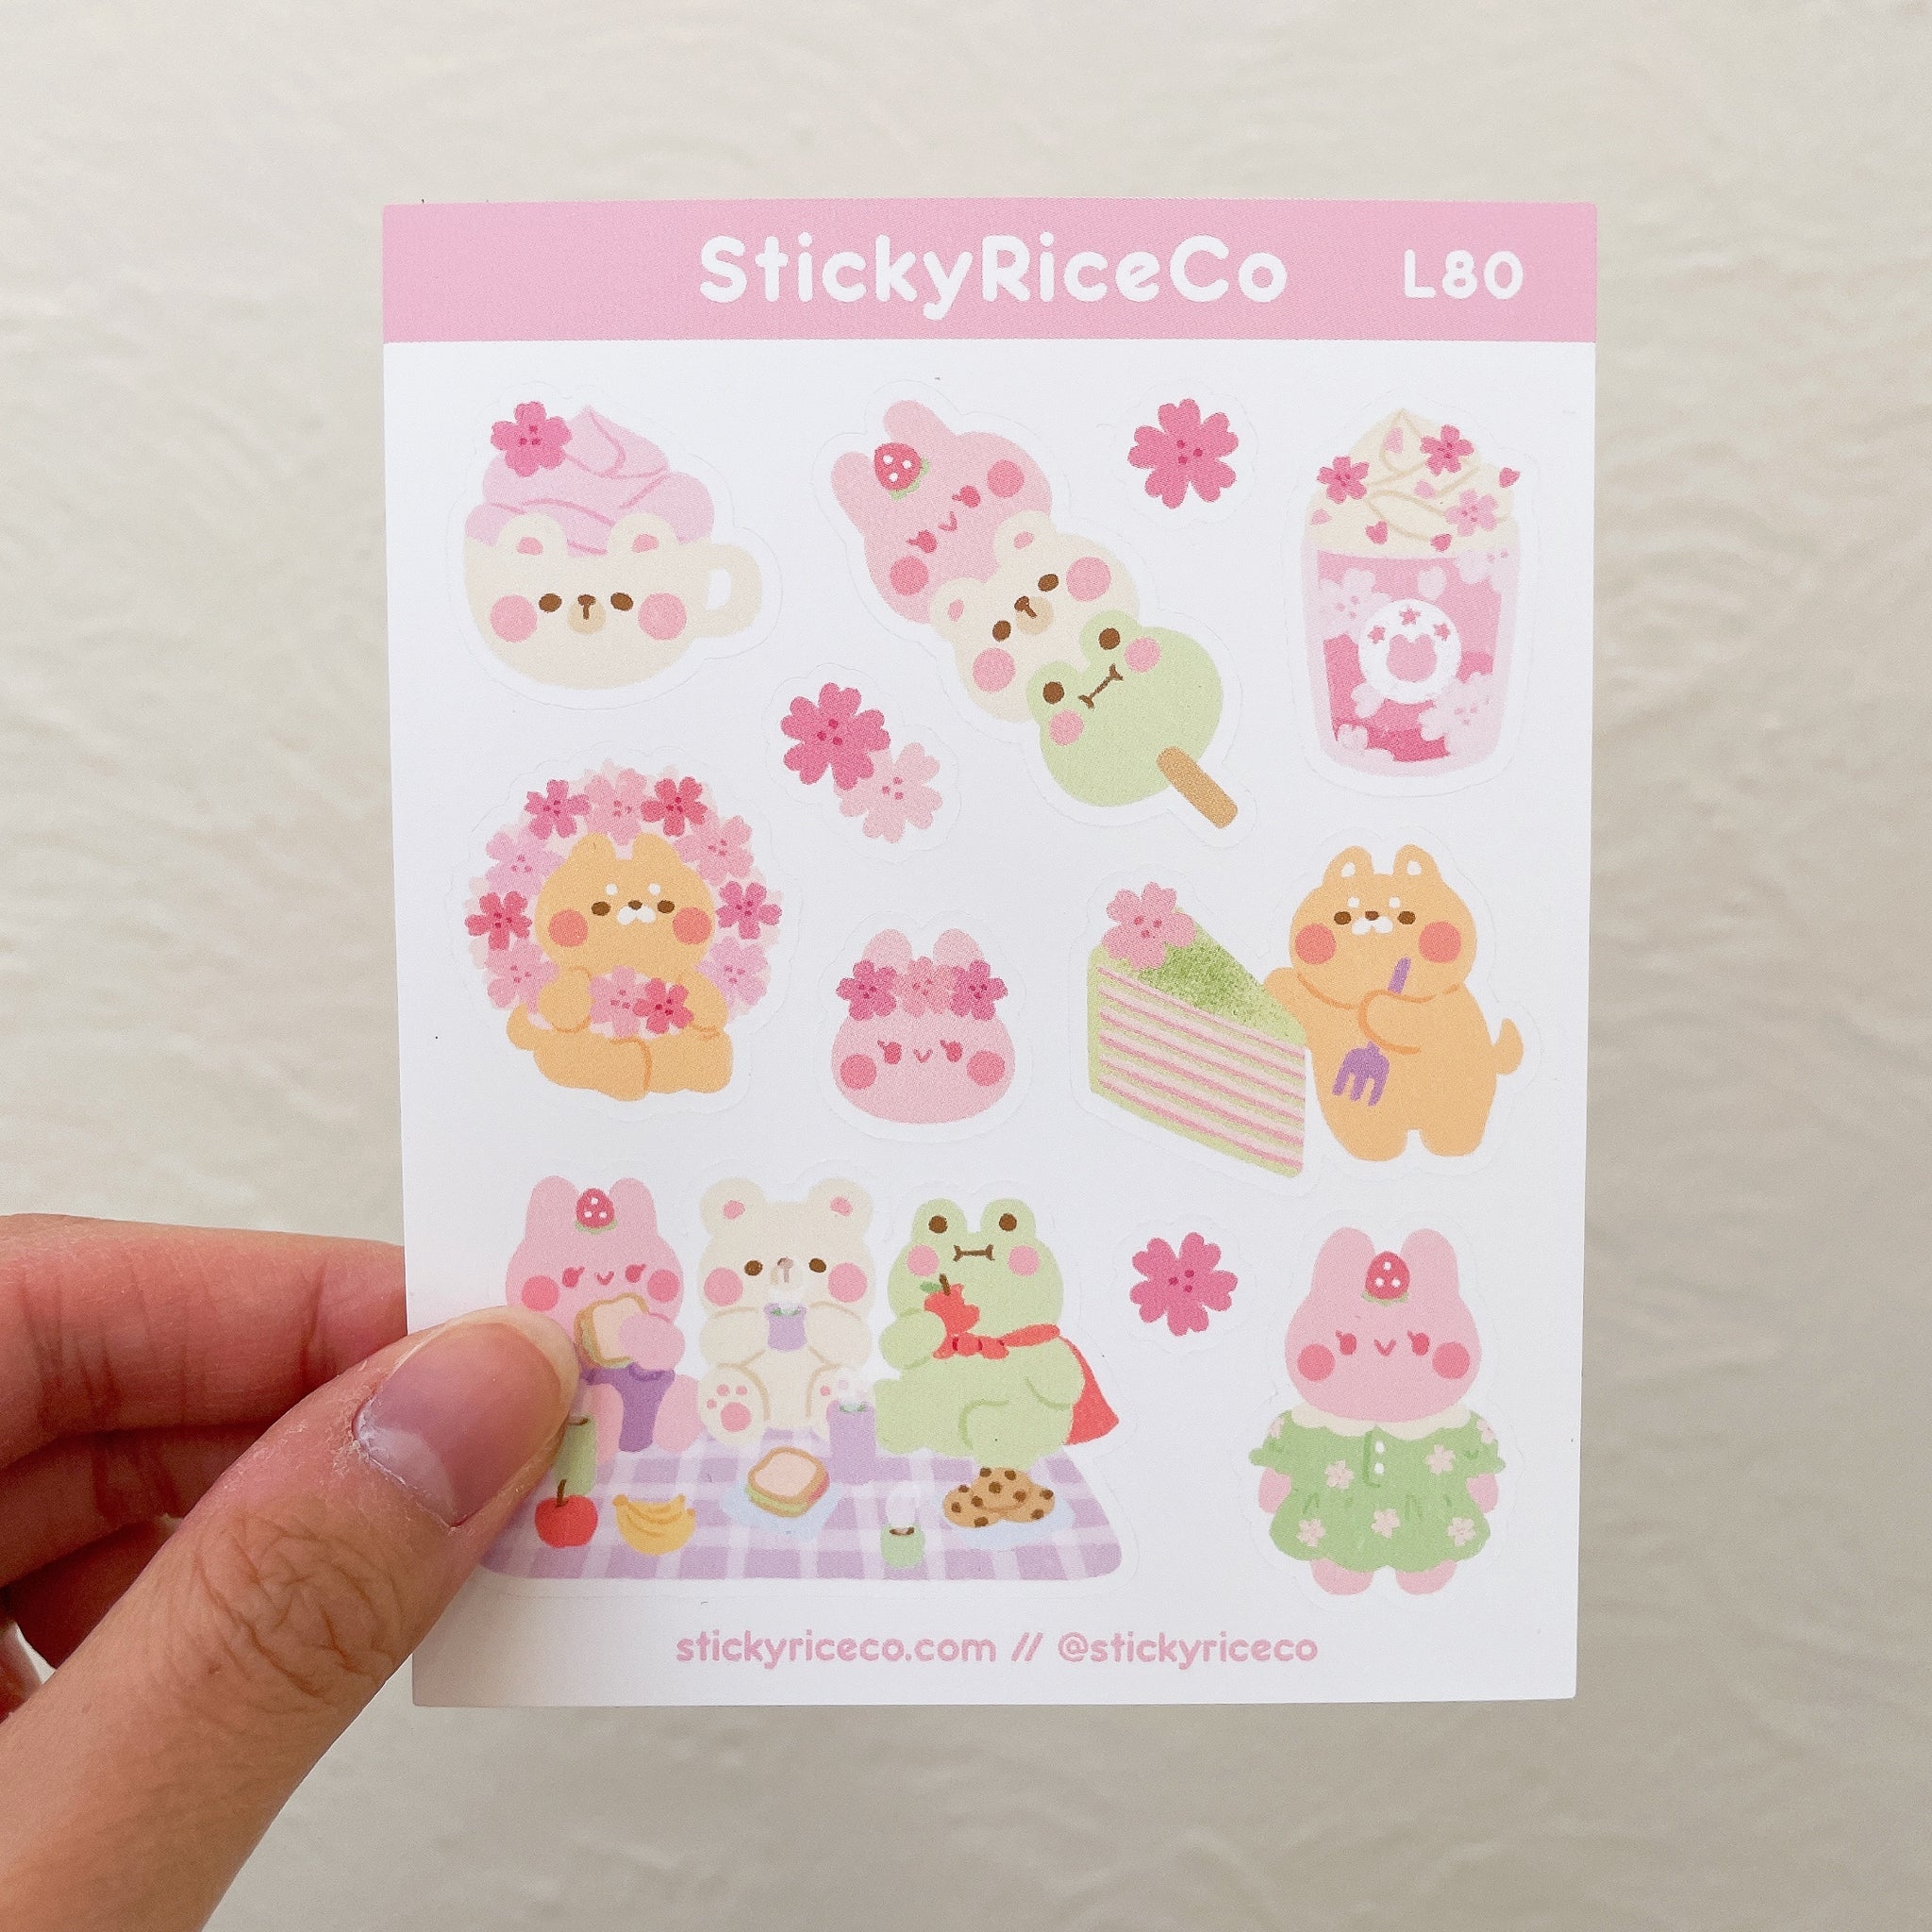 Sakura Cherry Blossoms Picnic with StickyRiceCo OCs Sticker Sheet